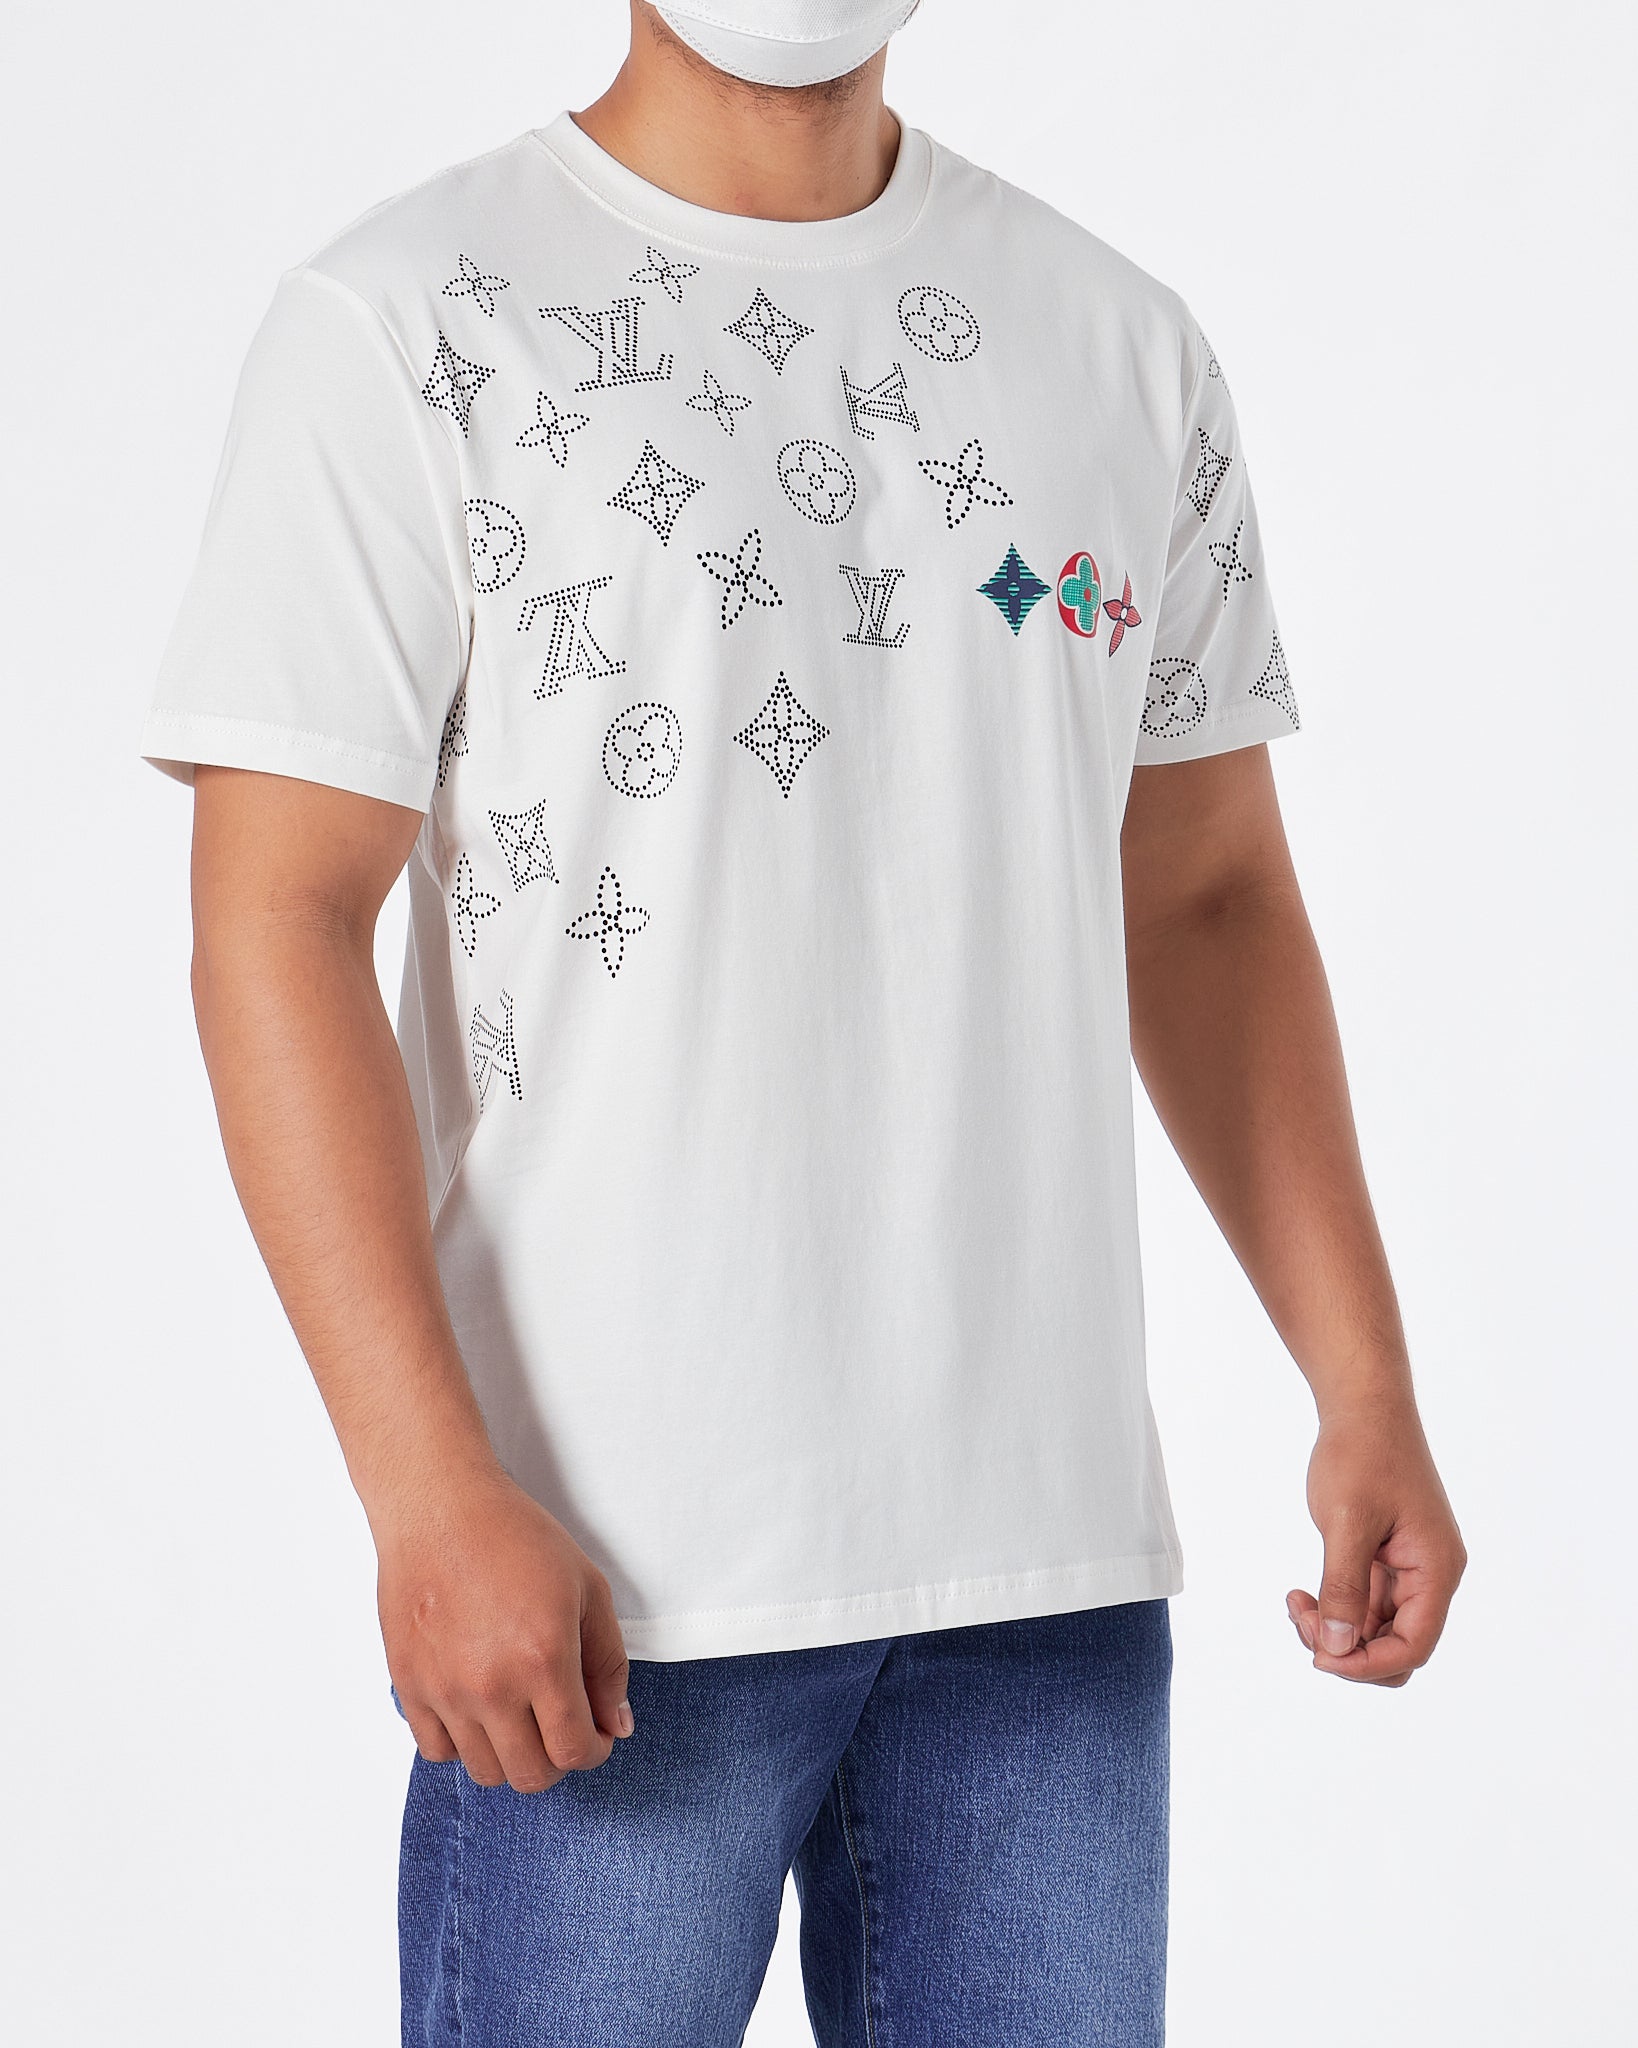 LV Logo Painting Men T-Shirt 59.90 - MOI OUTFIT